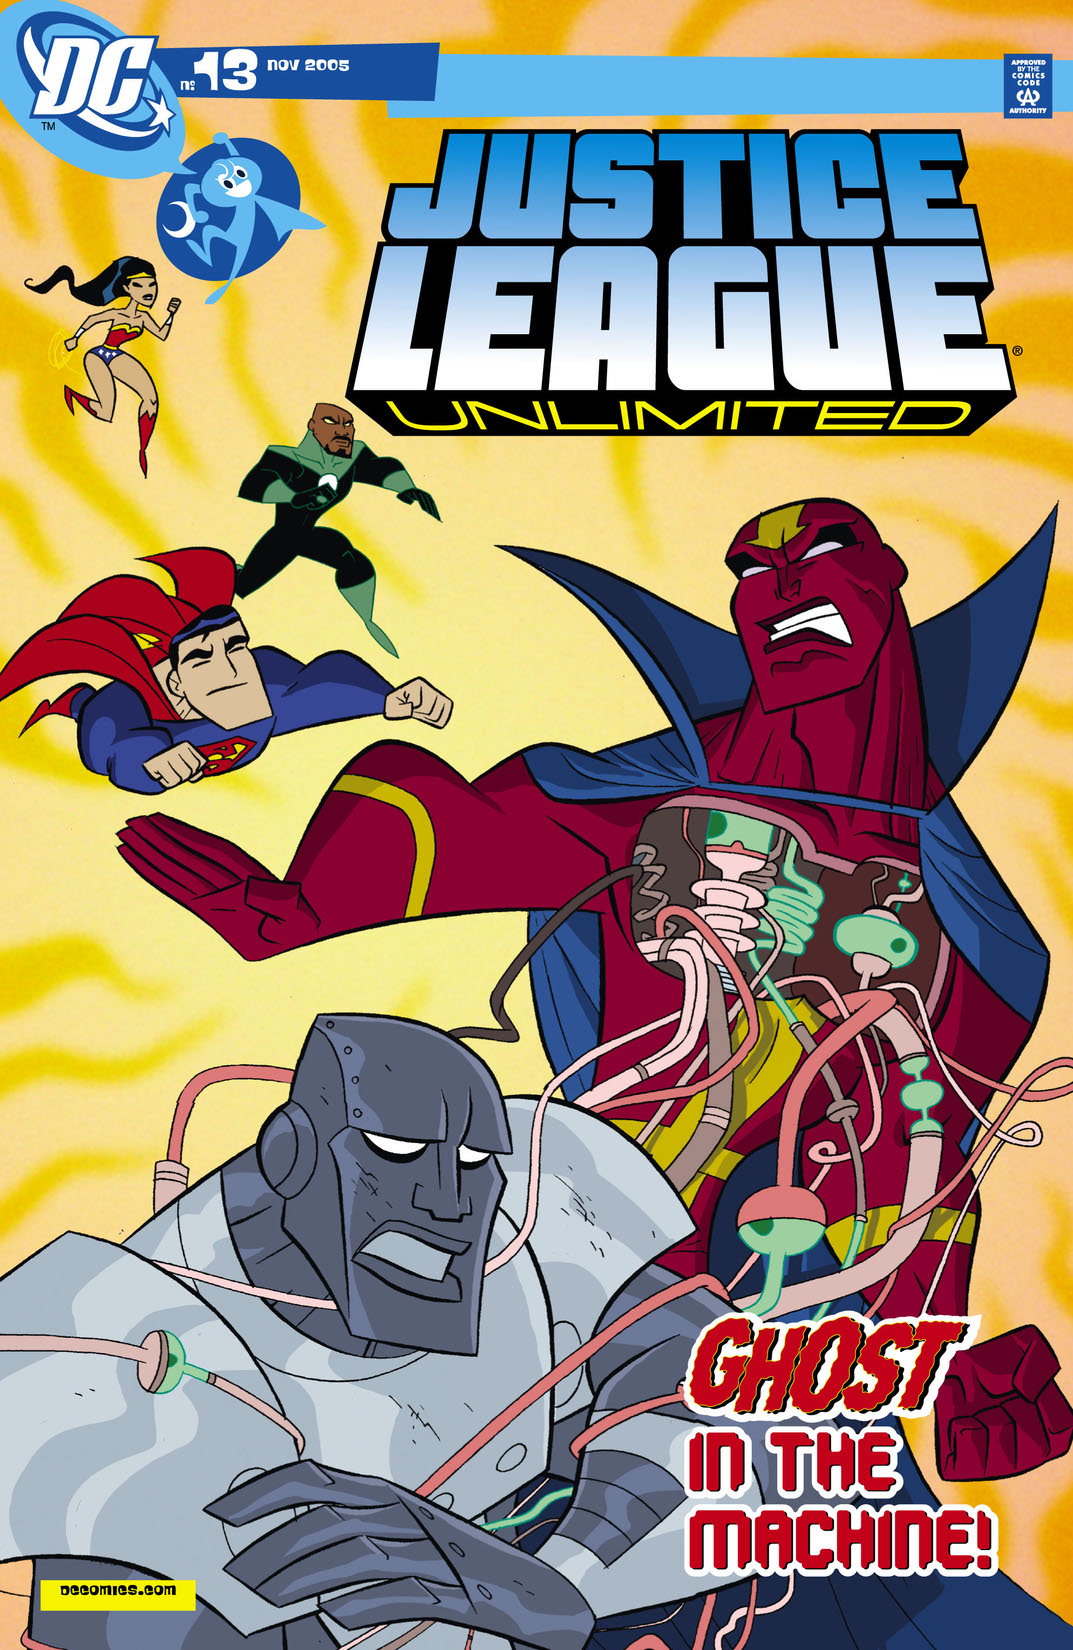 Justice League Unlimited #13 preview images